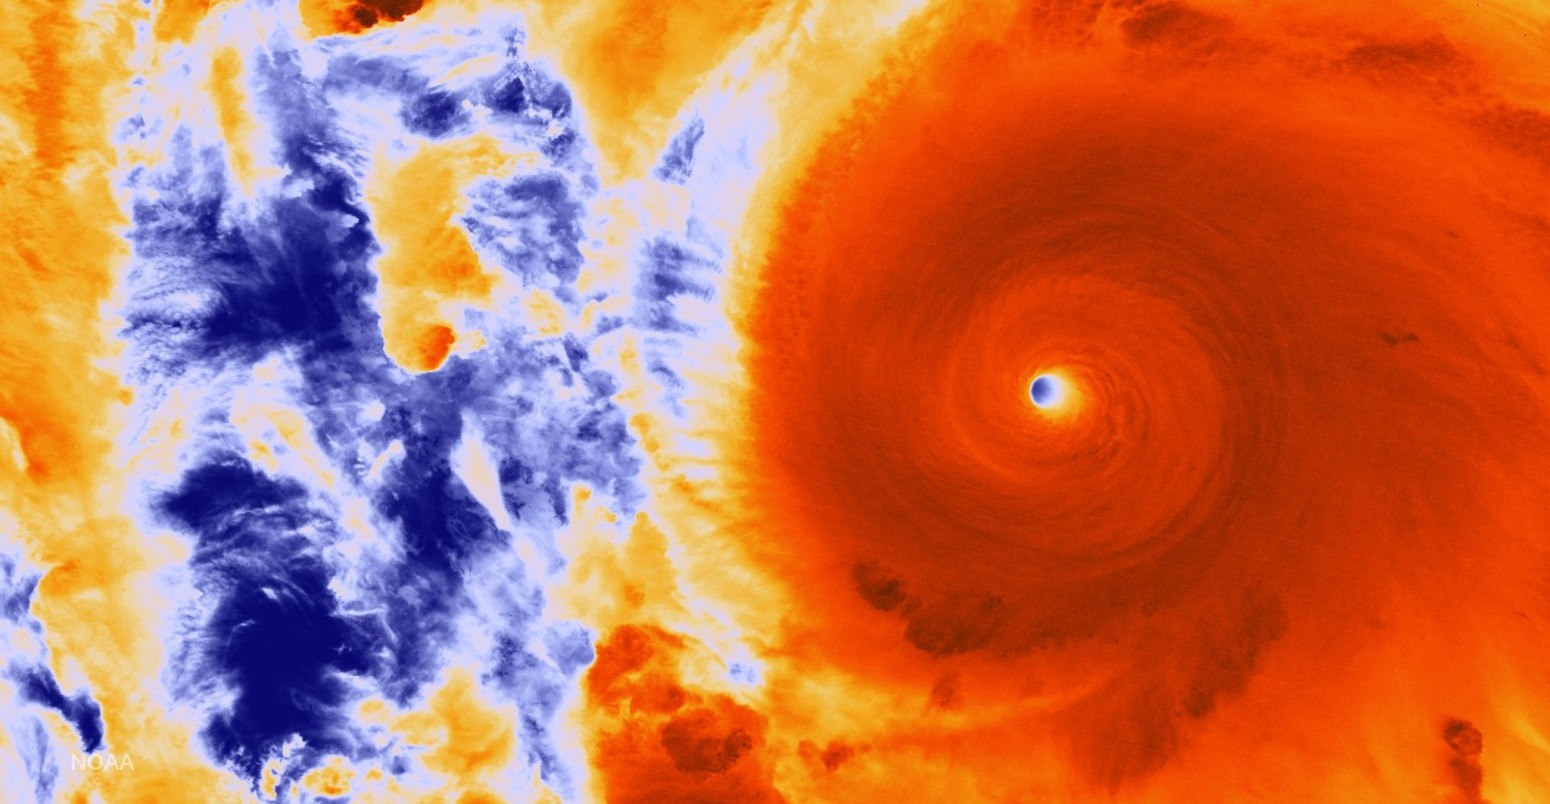 Hurricane Patricia's Eyewall on October 23, 2015.